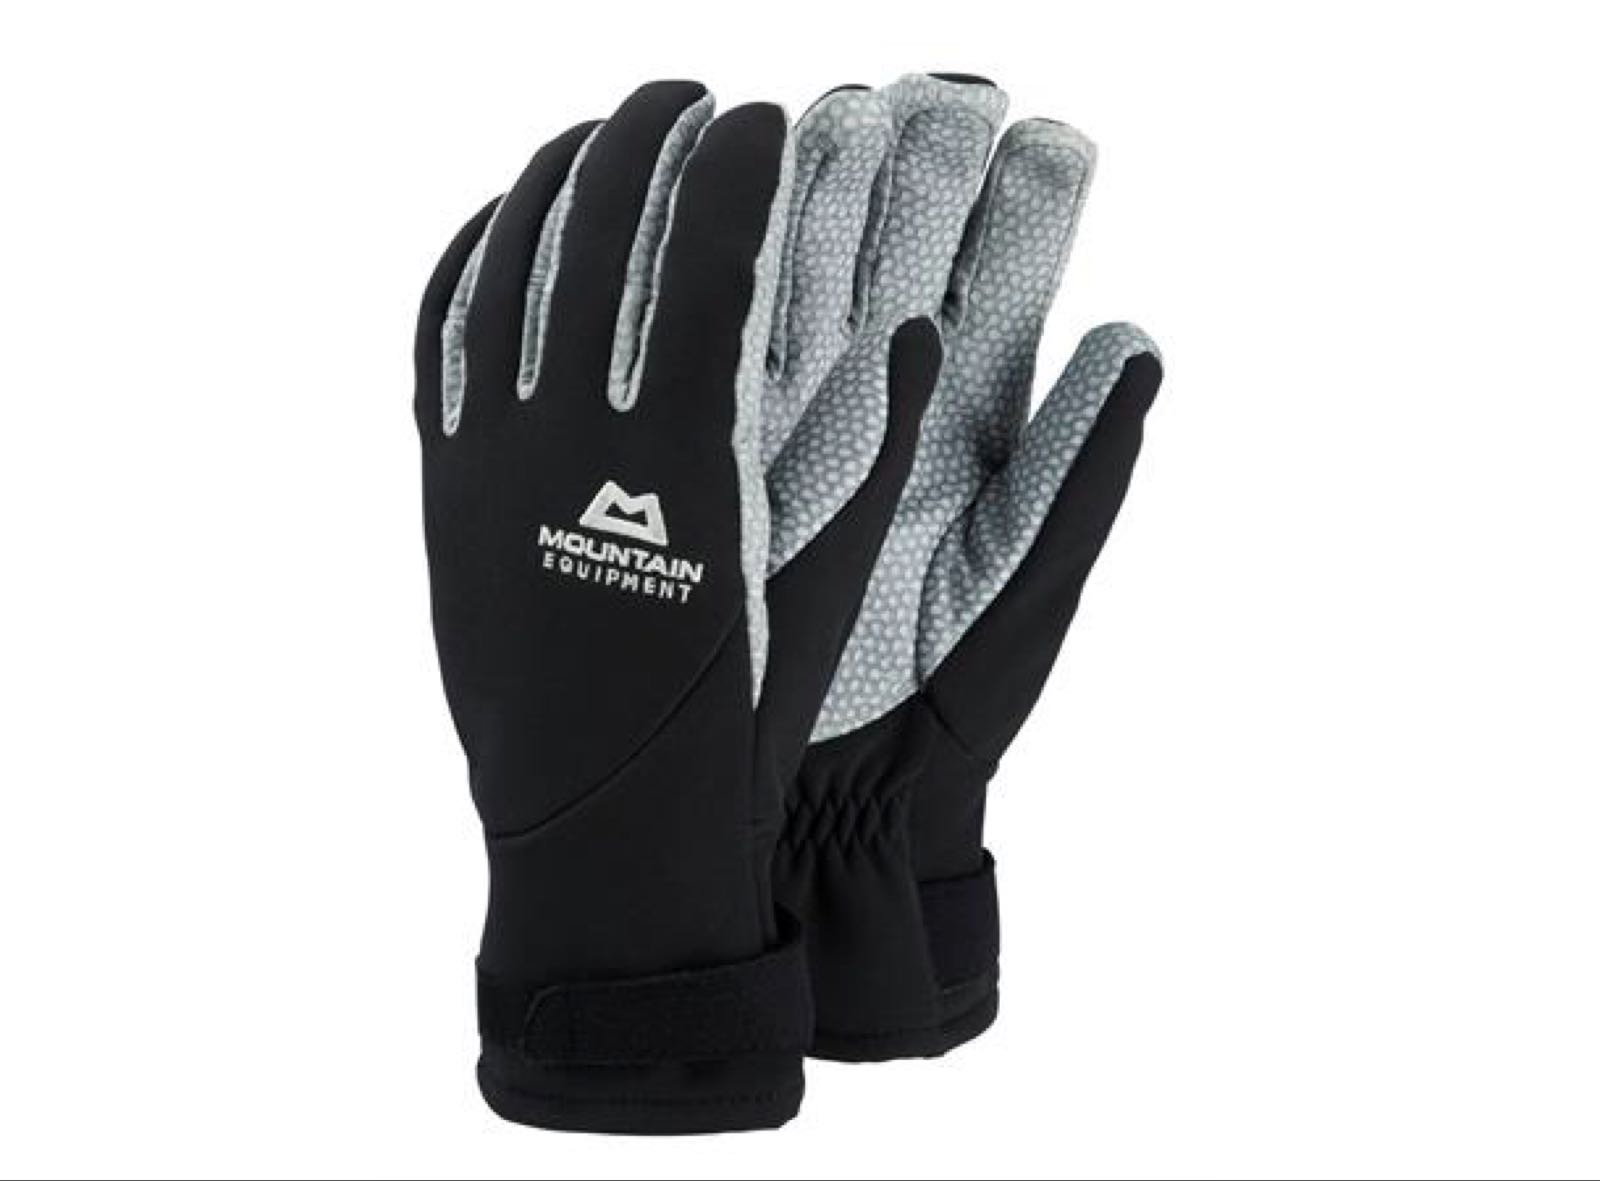 Super alpine glove